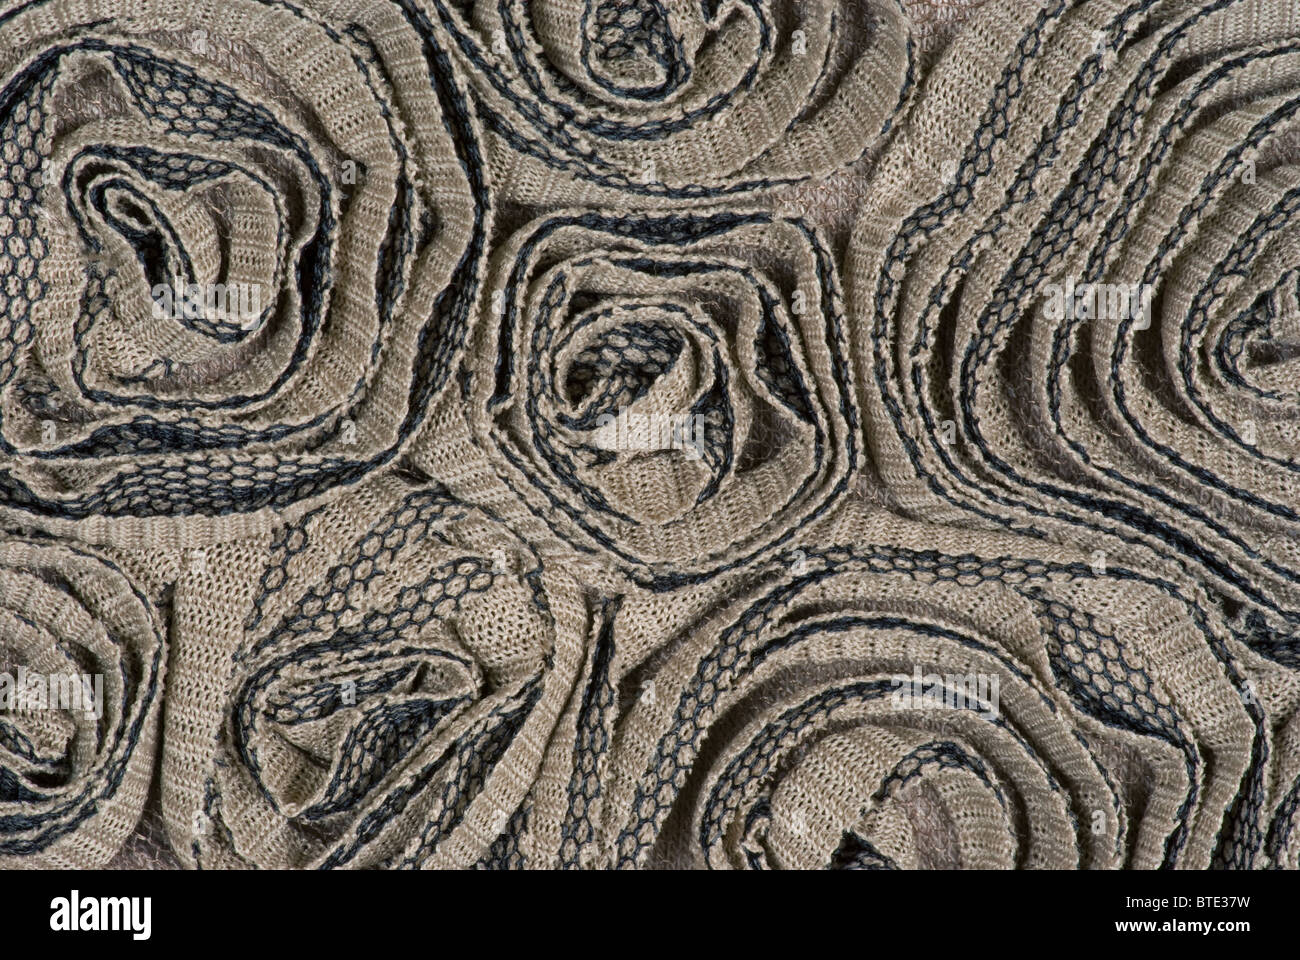 Escultura de tela. Tejido de punto de poliéster de algodón esculpido en forma de roseta redonda. Foto de stock